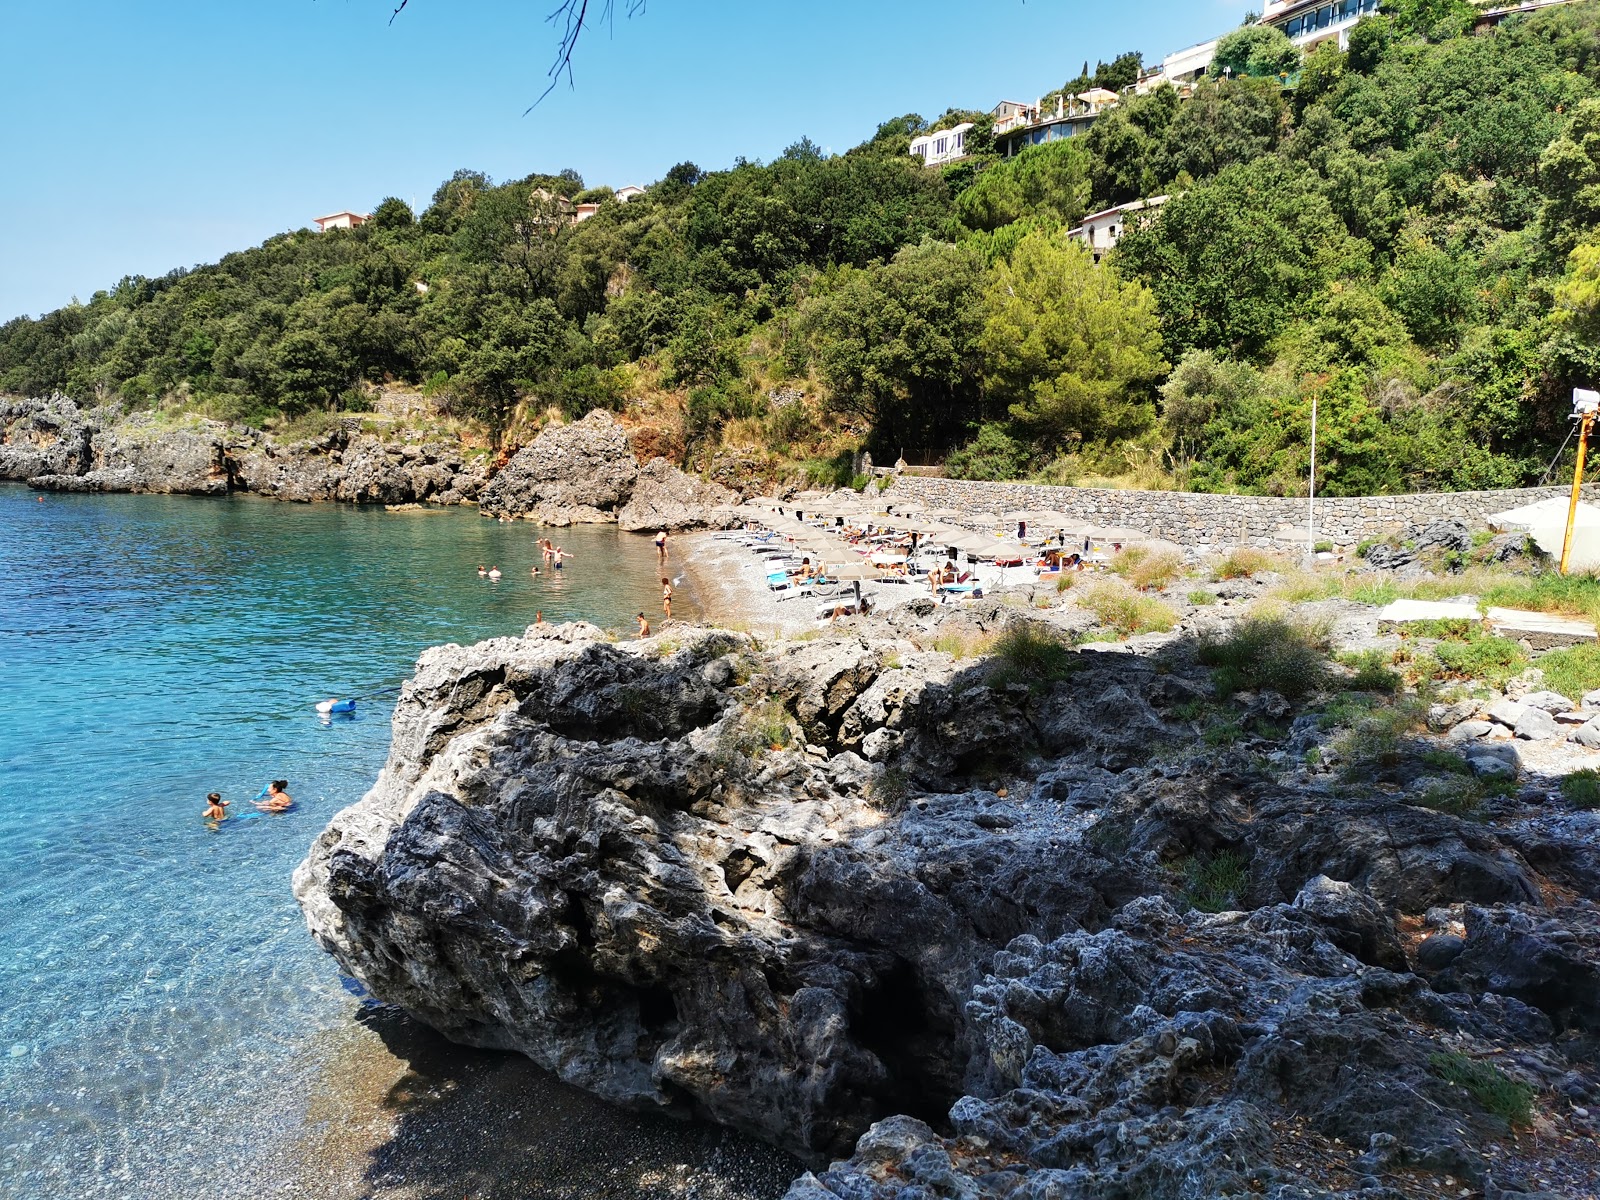 Foto de Spiaggia Portacquafridda área de resort de praia